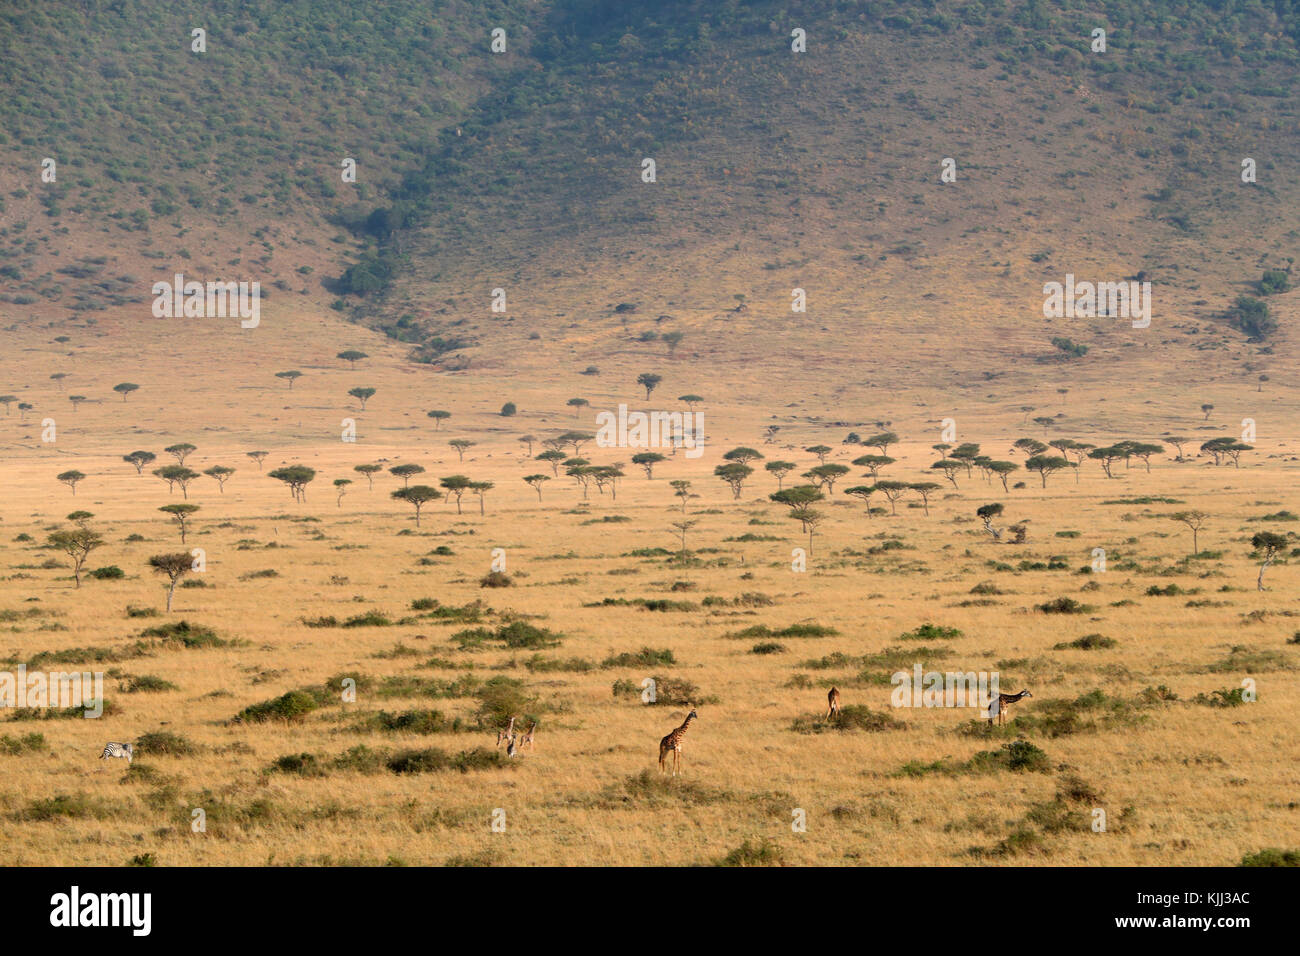 Sabanas africanas. Golden plains con animales. La reserva Masai Mara. Kenya. Foto de stock